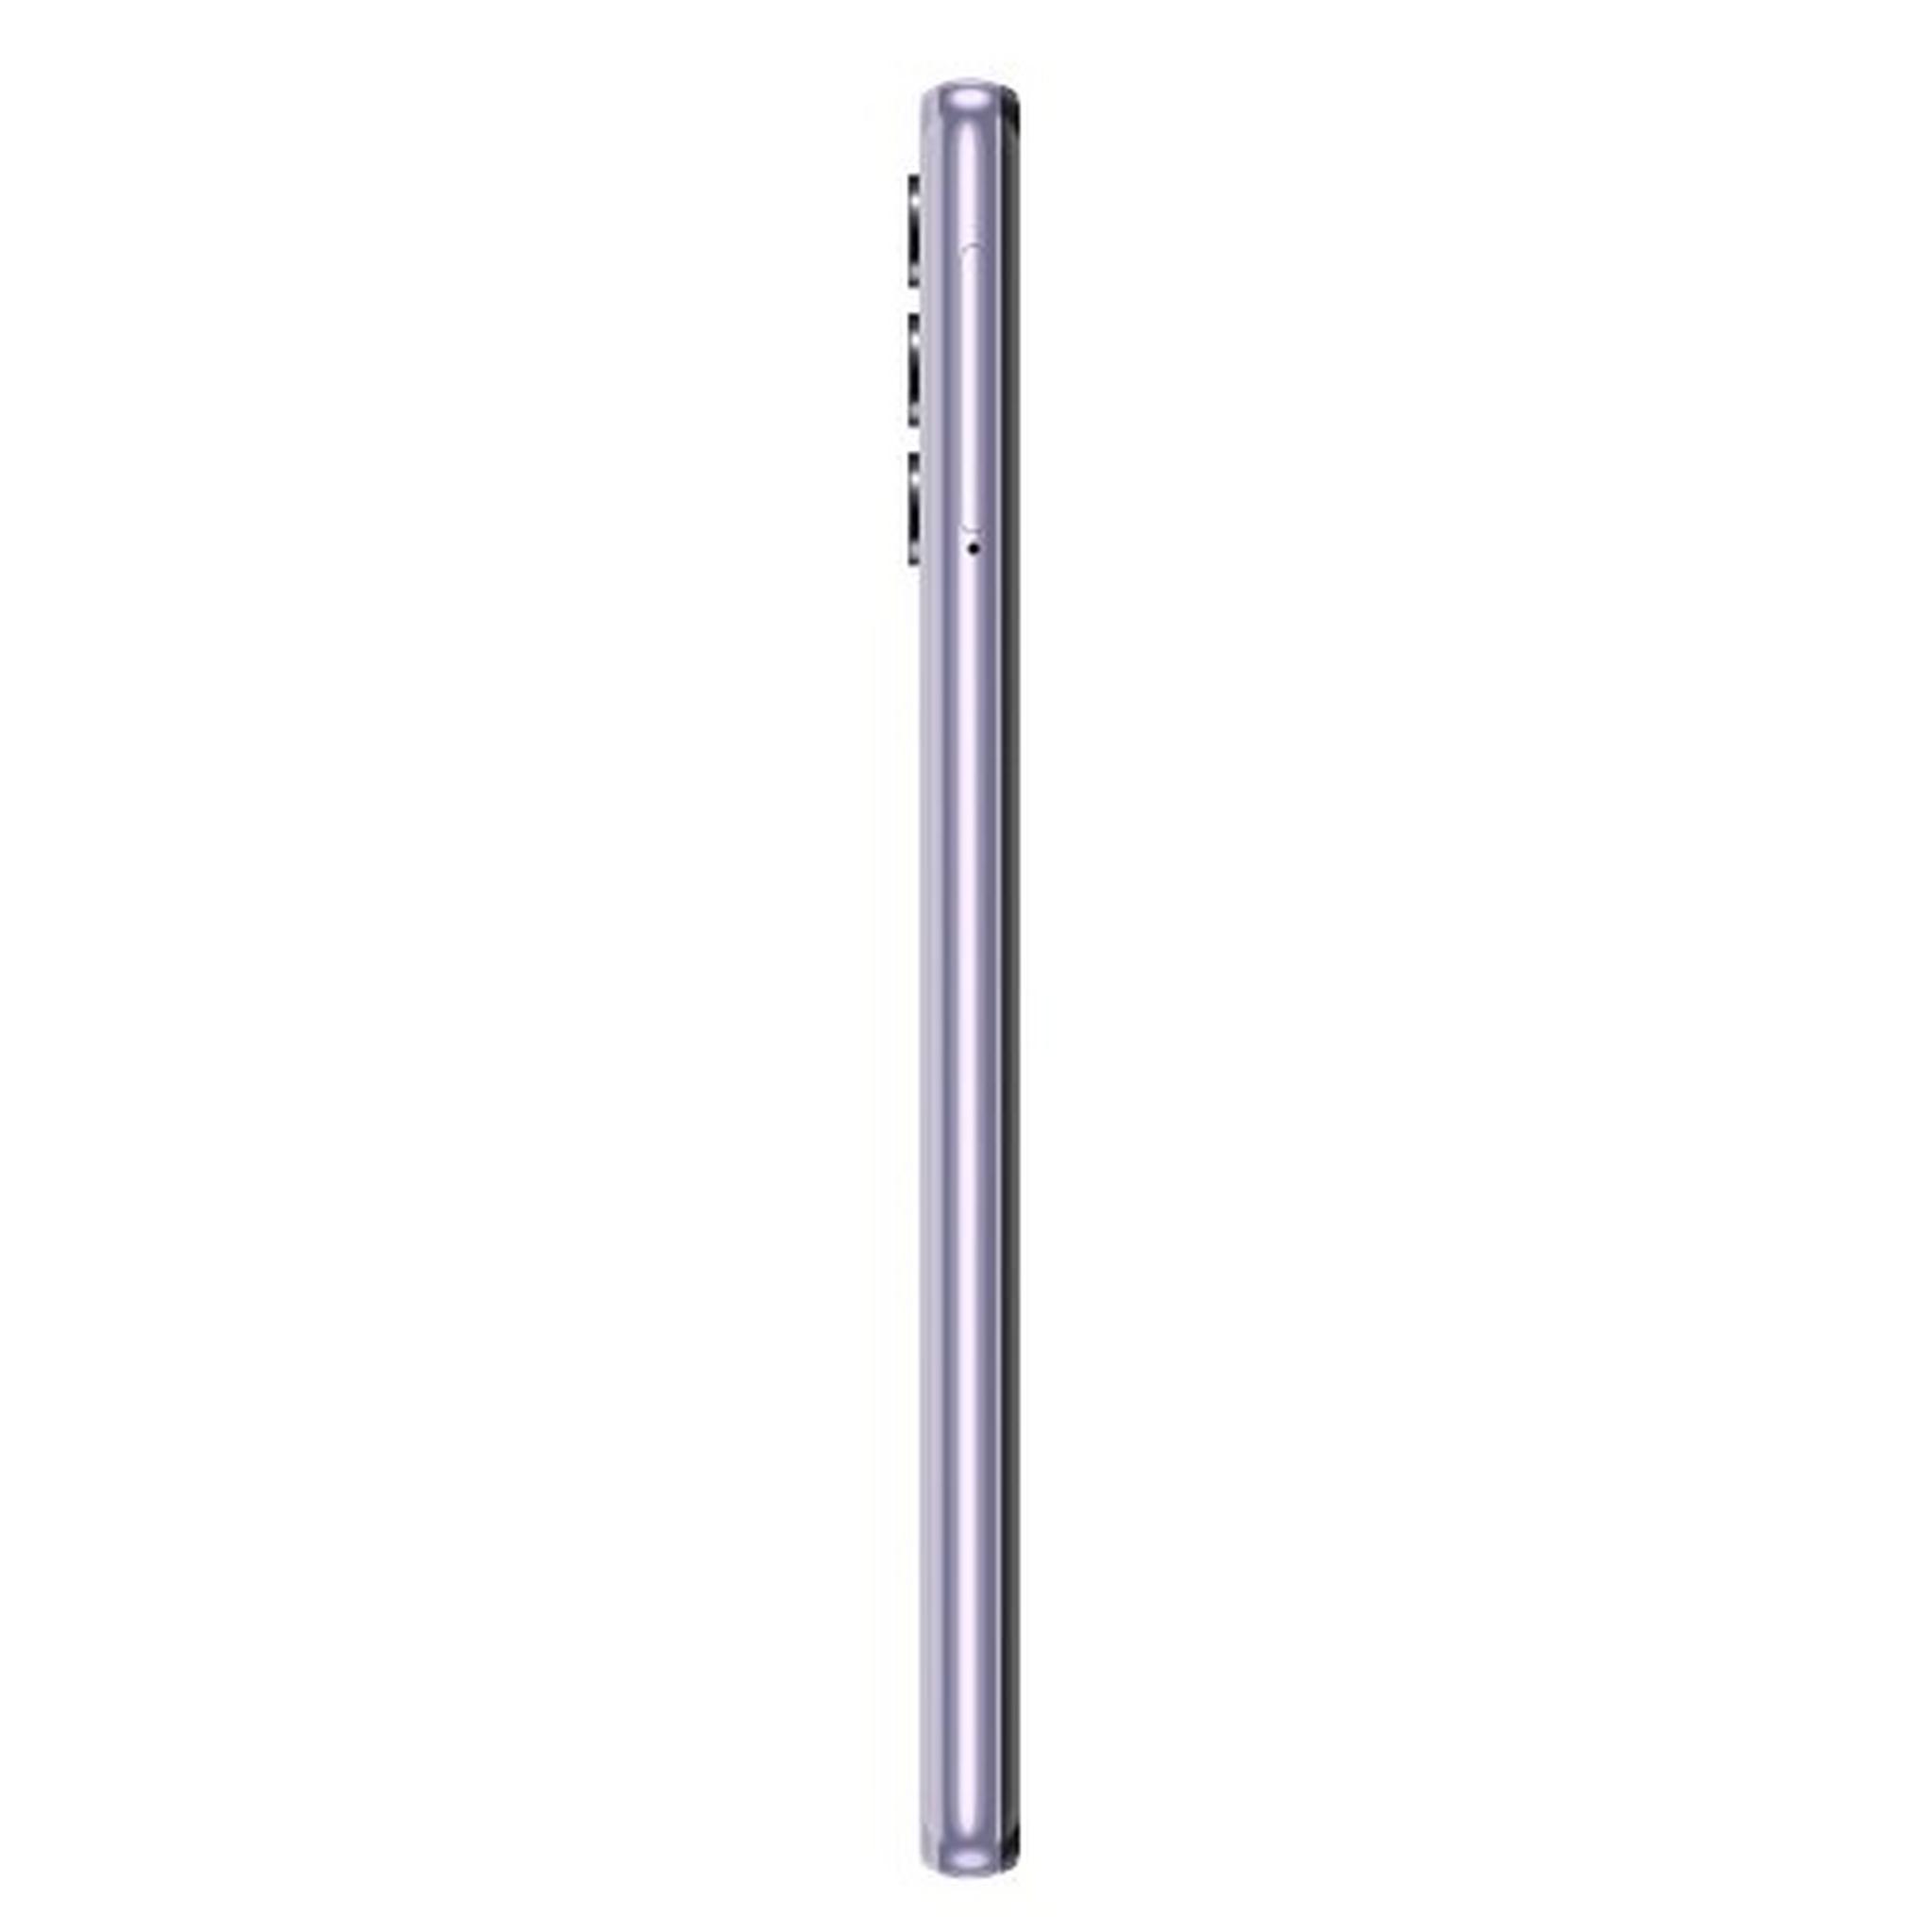 Samsung Galaxy A32 5G 128GB Phone - Awesome Violet